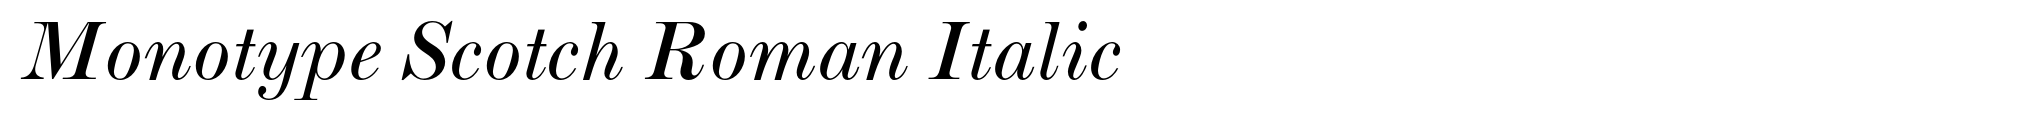 Monotype Scotch Roman Italic image